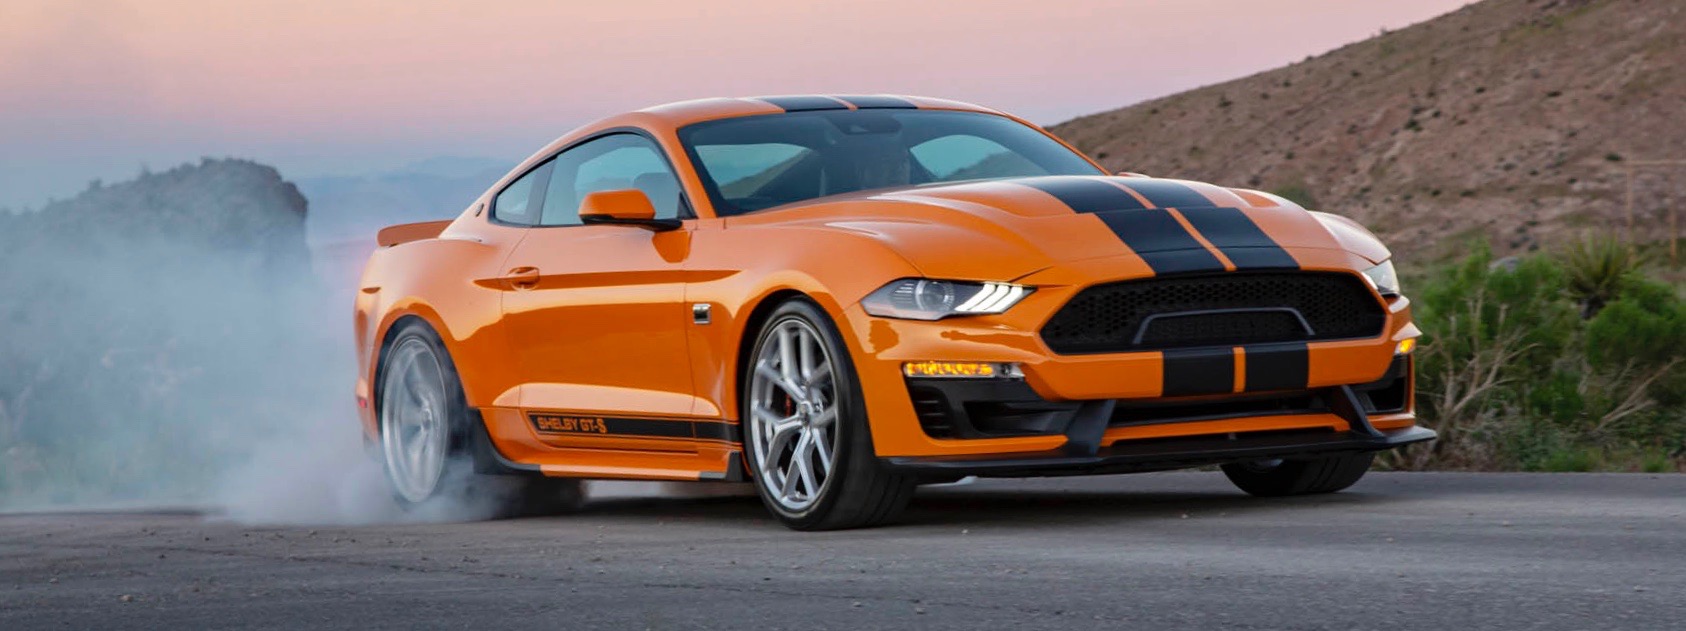 Mustang GT-S, Shelby preparing fleet of Mustang GT-S rental cars, ClassicCars.com Journal